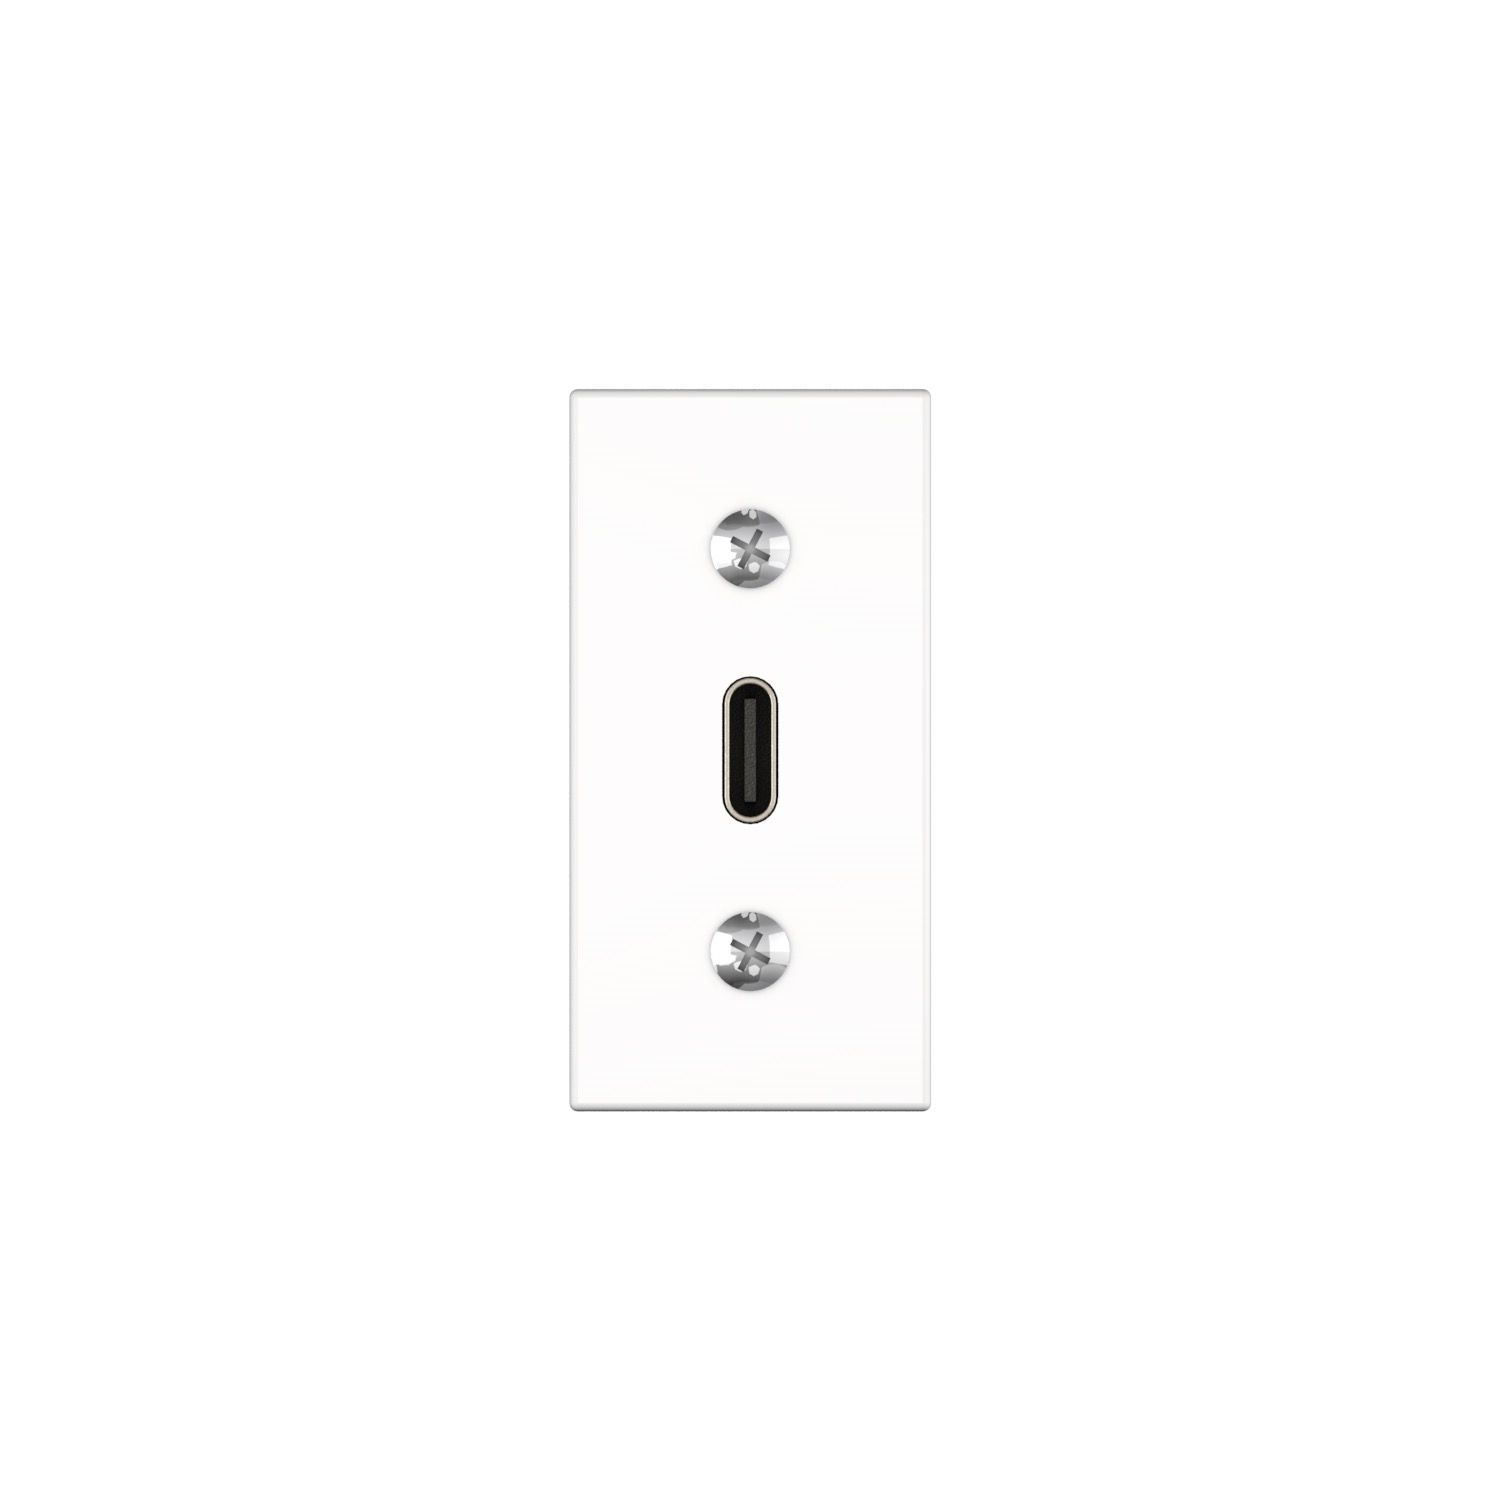 Kindermann Konnect flex 45 click connector panel USB C 3.1 (f/m) - Half panel - White